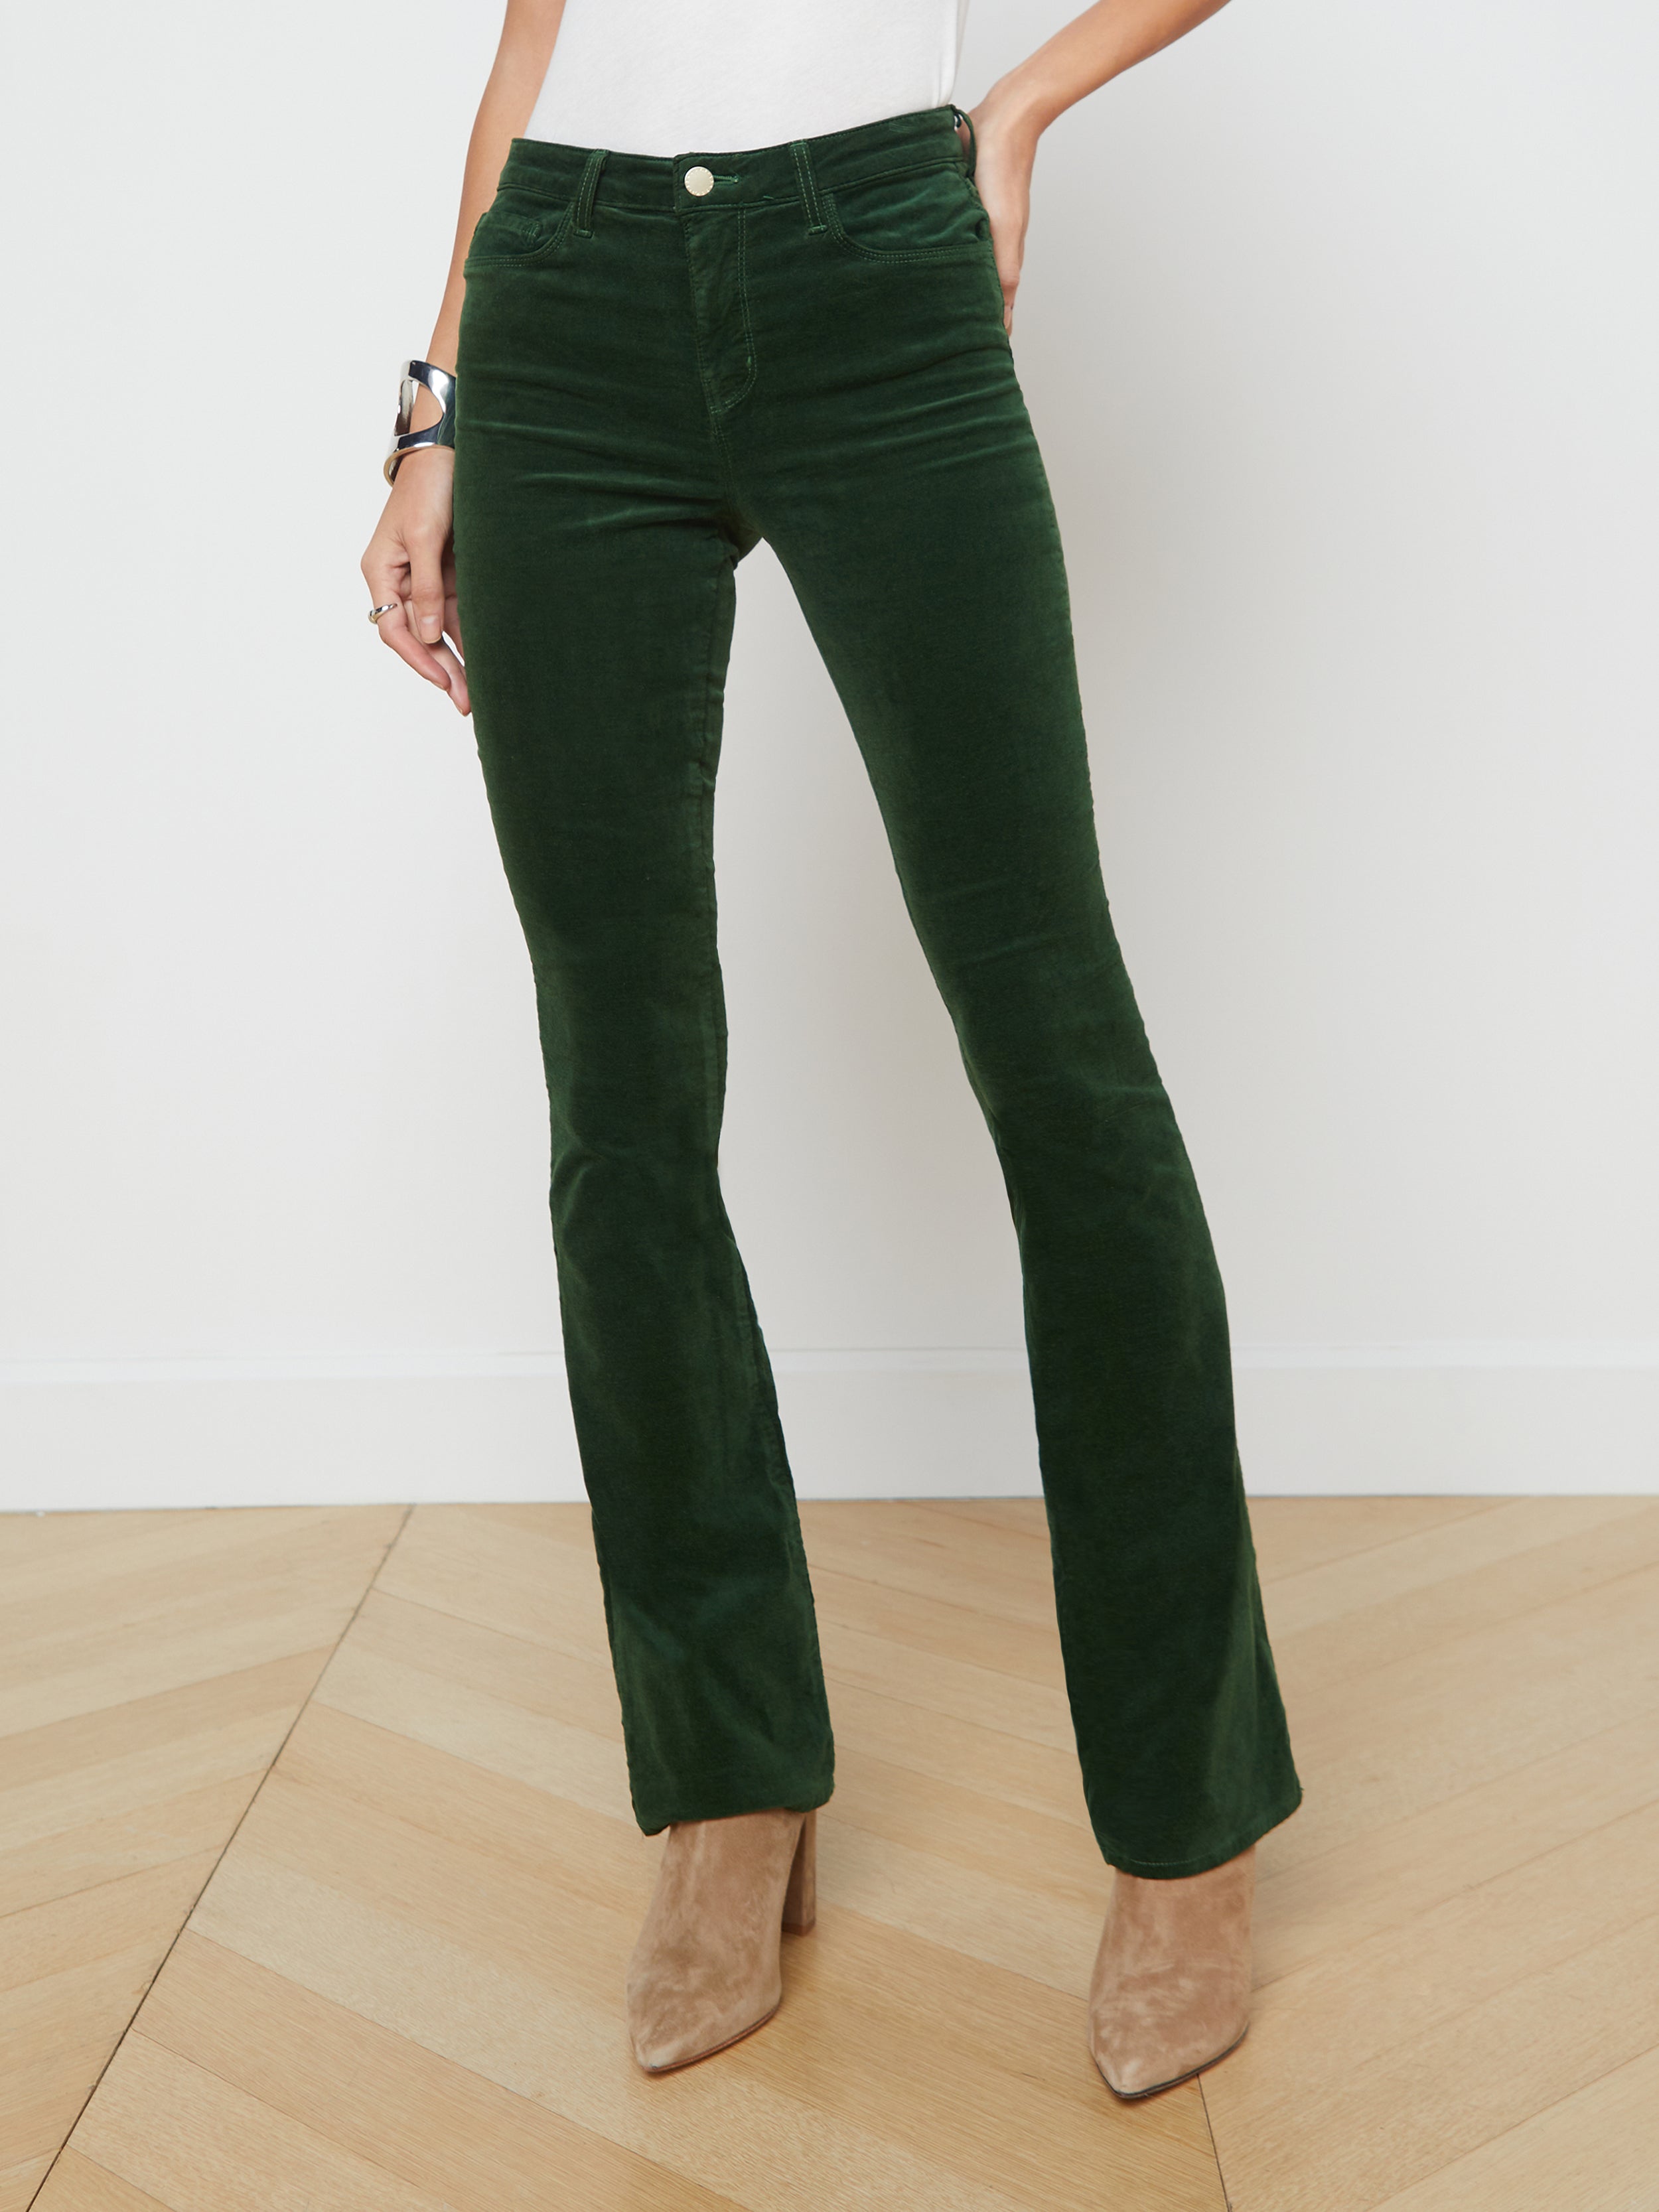 GAP Denim Loose Fit Dark Green Denim Pants Men's Size 31 x 34 | eBay